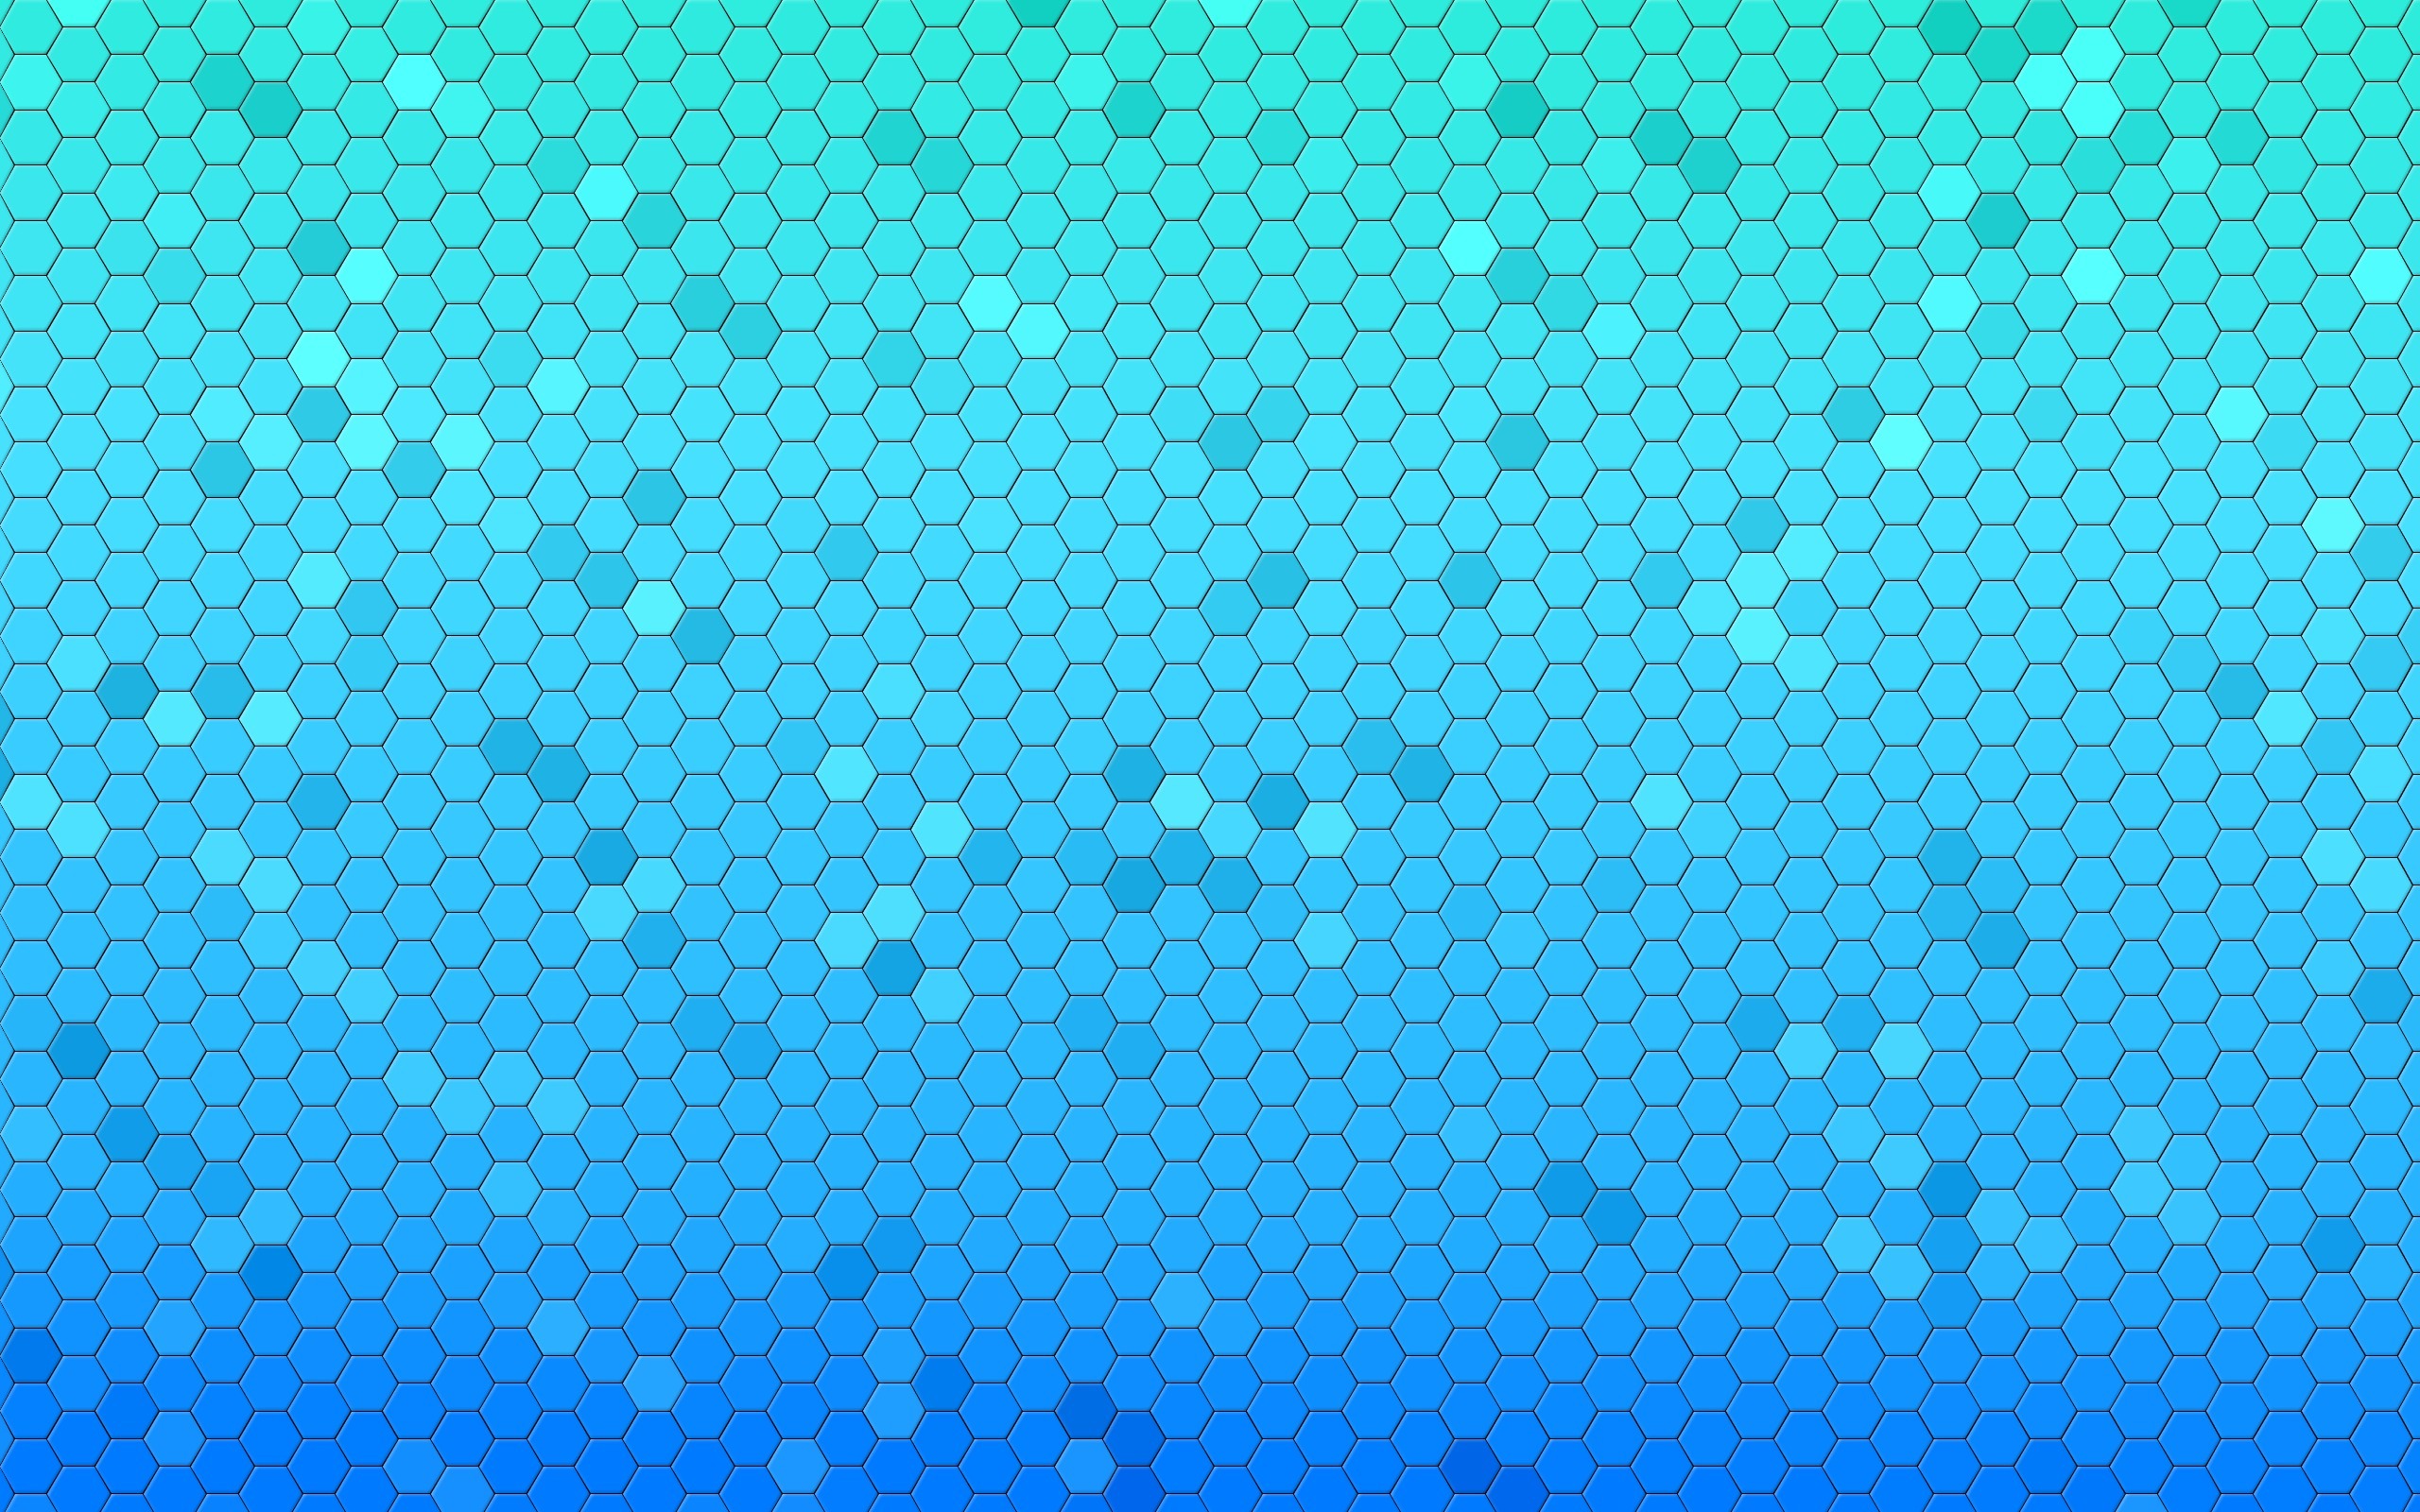 Wallpapers patterns hexagons texture on the desktop